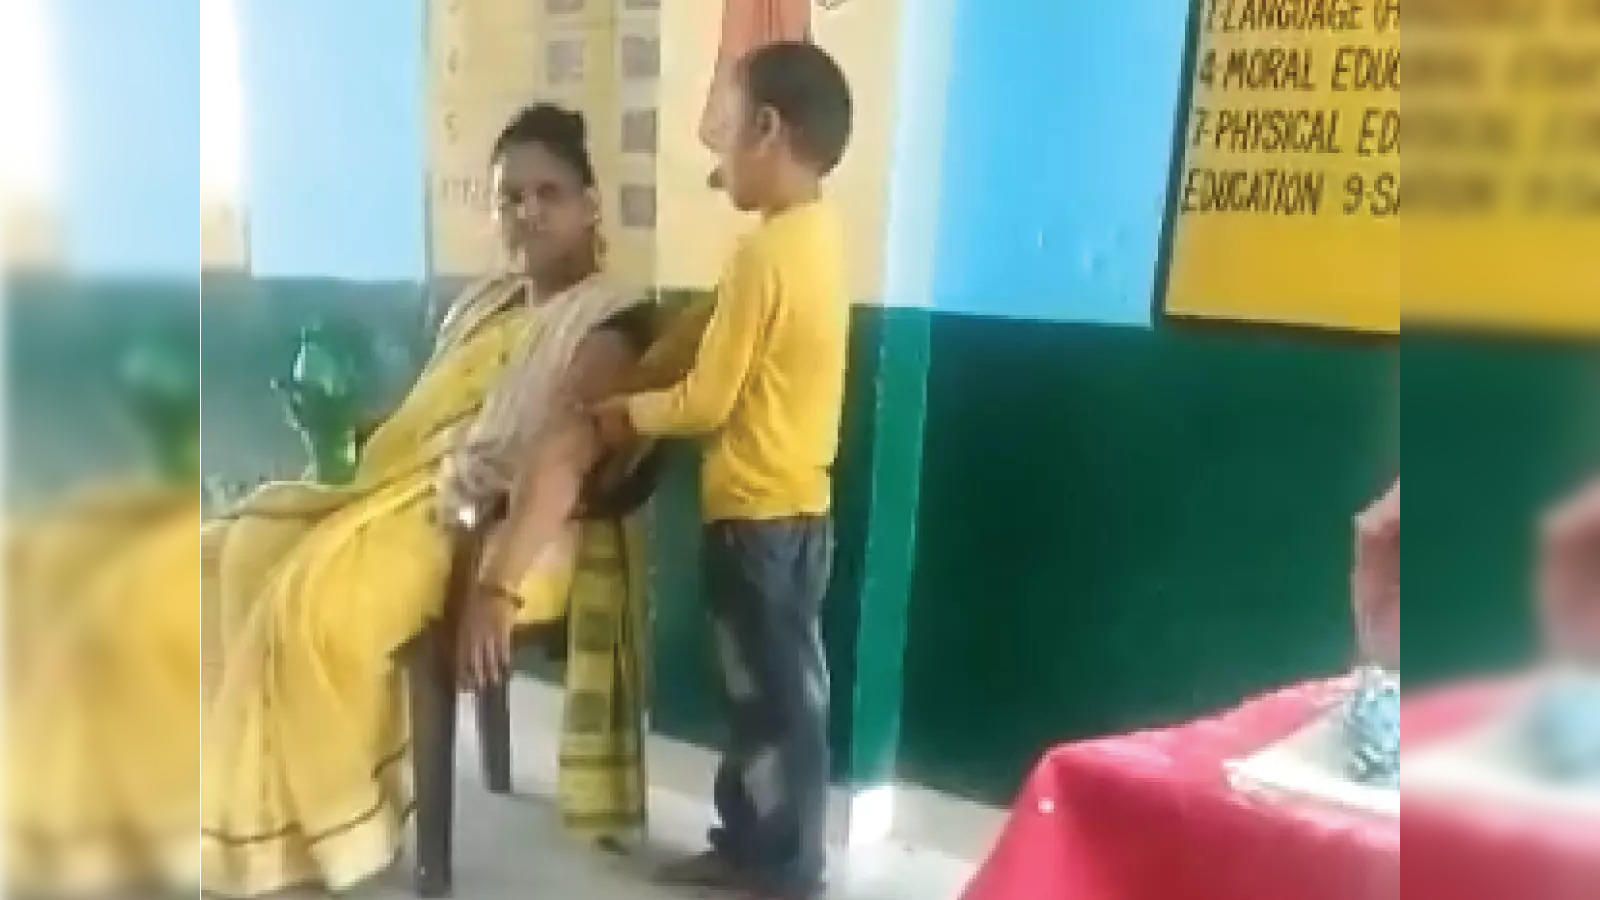 Tichar Rep Xxx - Teacher Massage: Teacher gets student to massage her arm, is suspended:  Viral video - The Economic Times